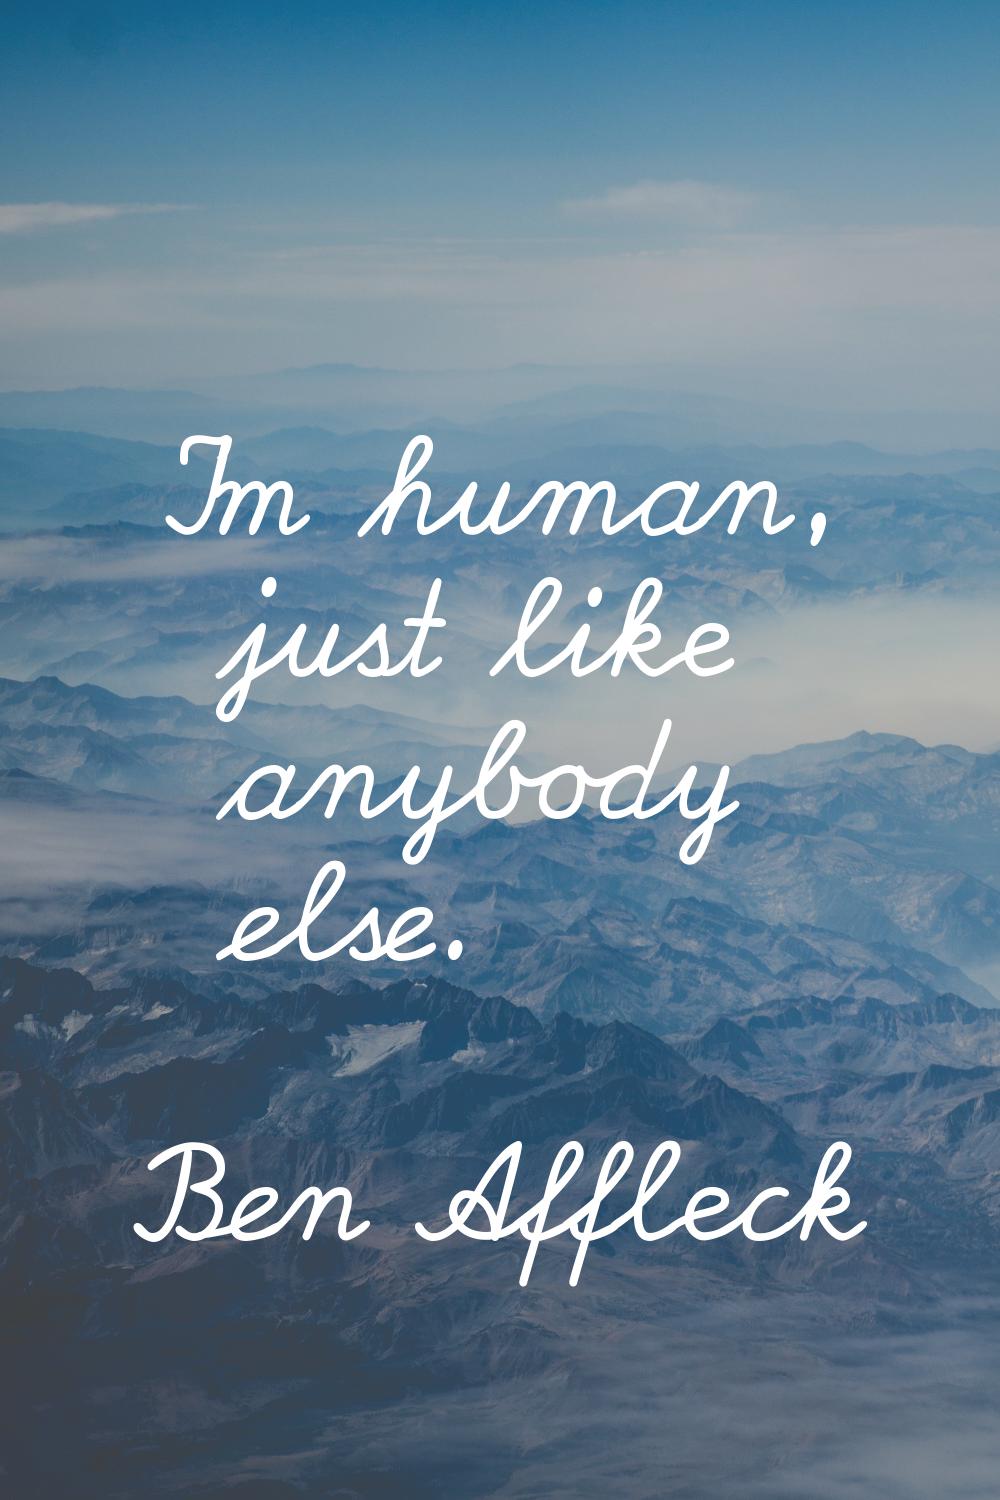 I'm human, just like anybody else.